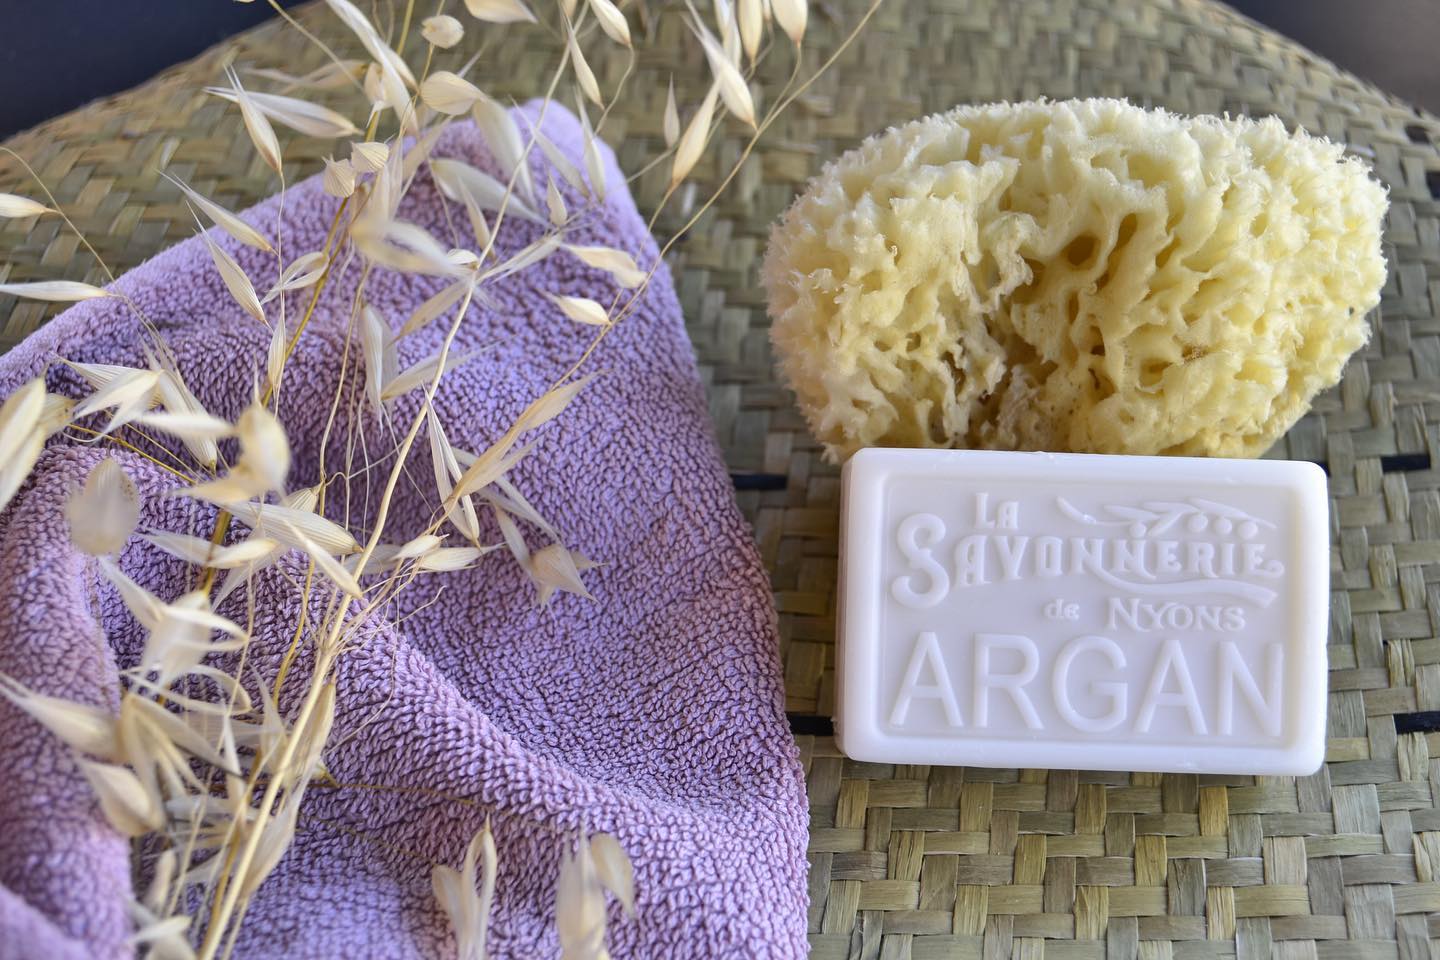 White bar of soap that reads La Savonnerie de Nyons Argan next to a natural bath sponge, sprigs of wheat, and a purple towel.